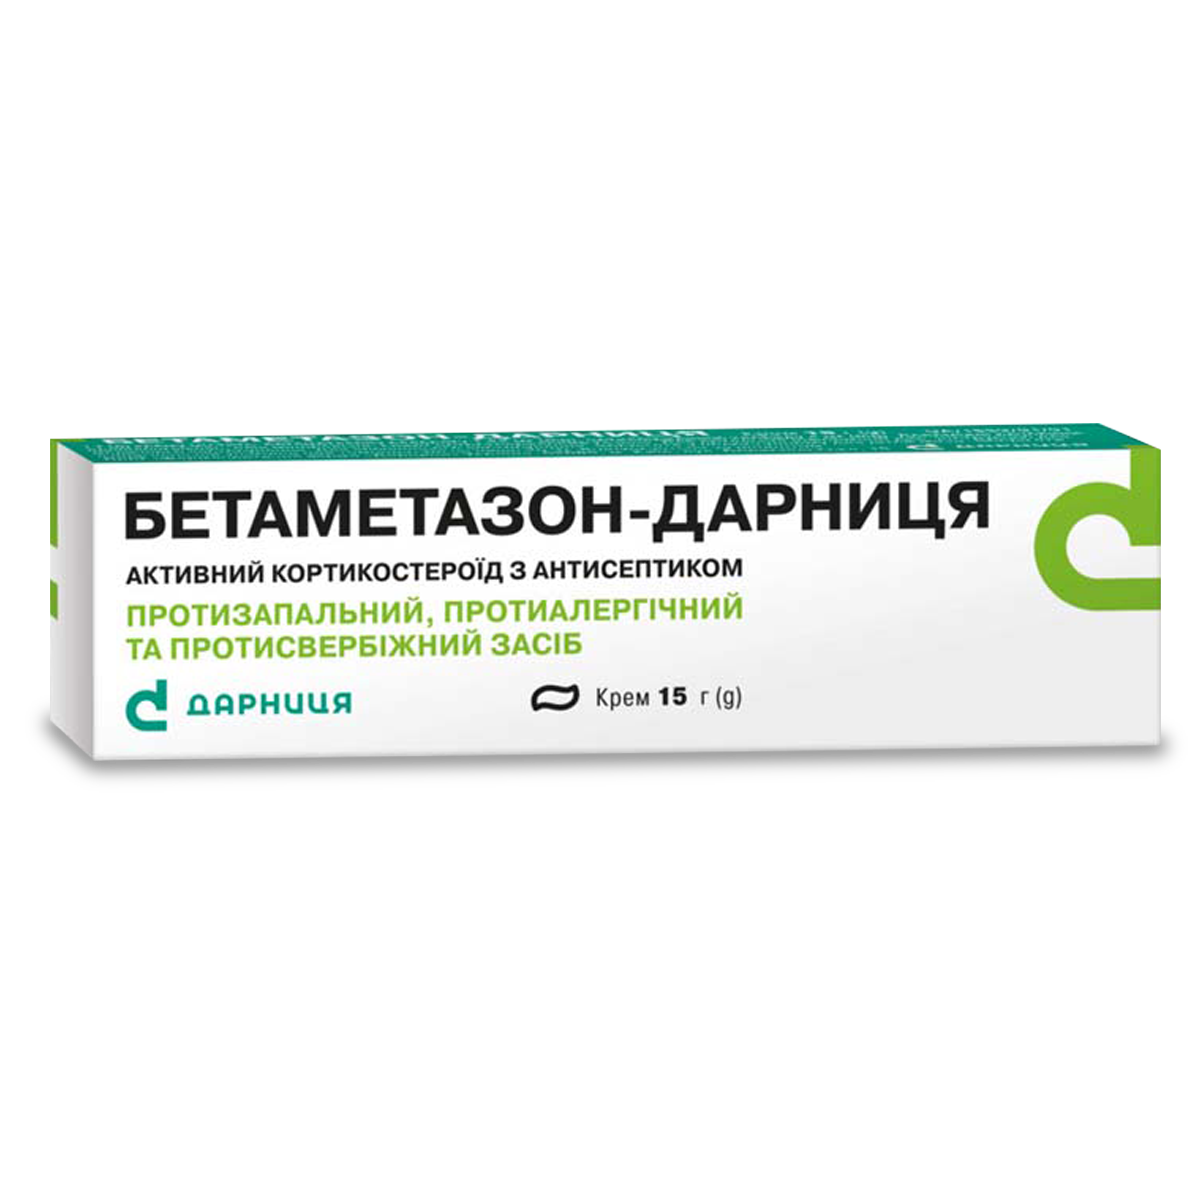 Betamethasone-Darnitsa